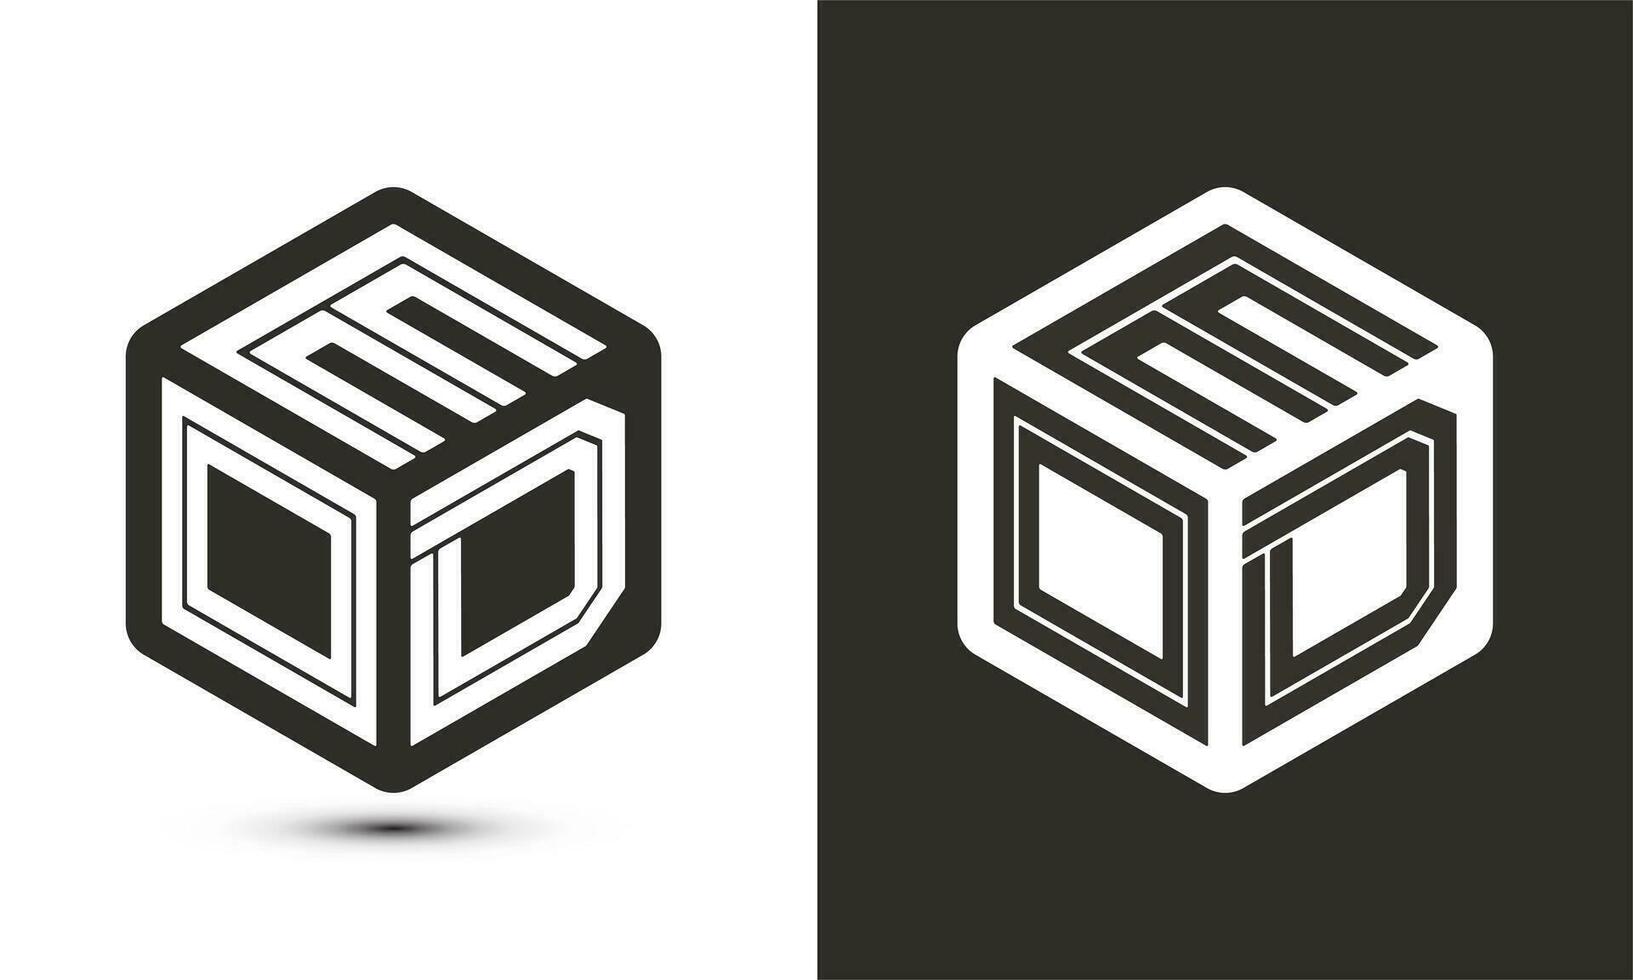 eod letra logo diseño con ilustrador cubo logo, vector logo moderno alfabeto fuente superposición estilo.